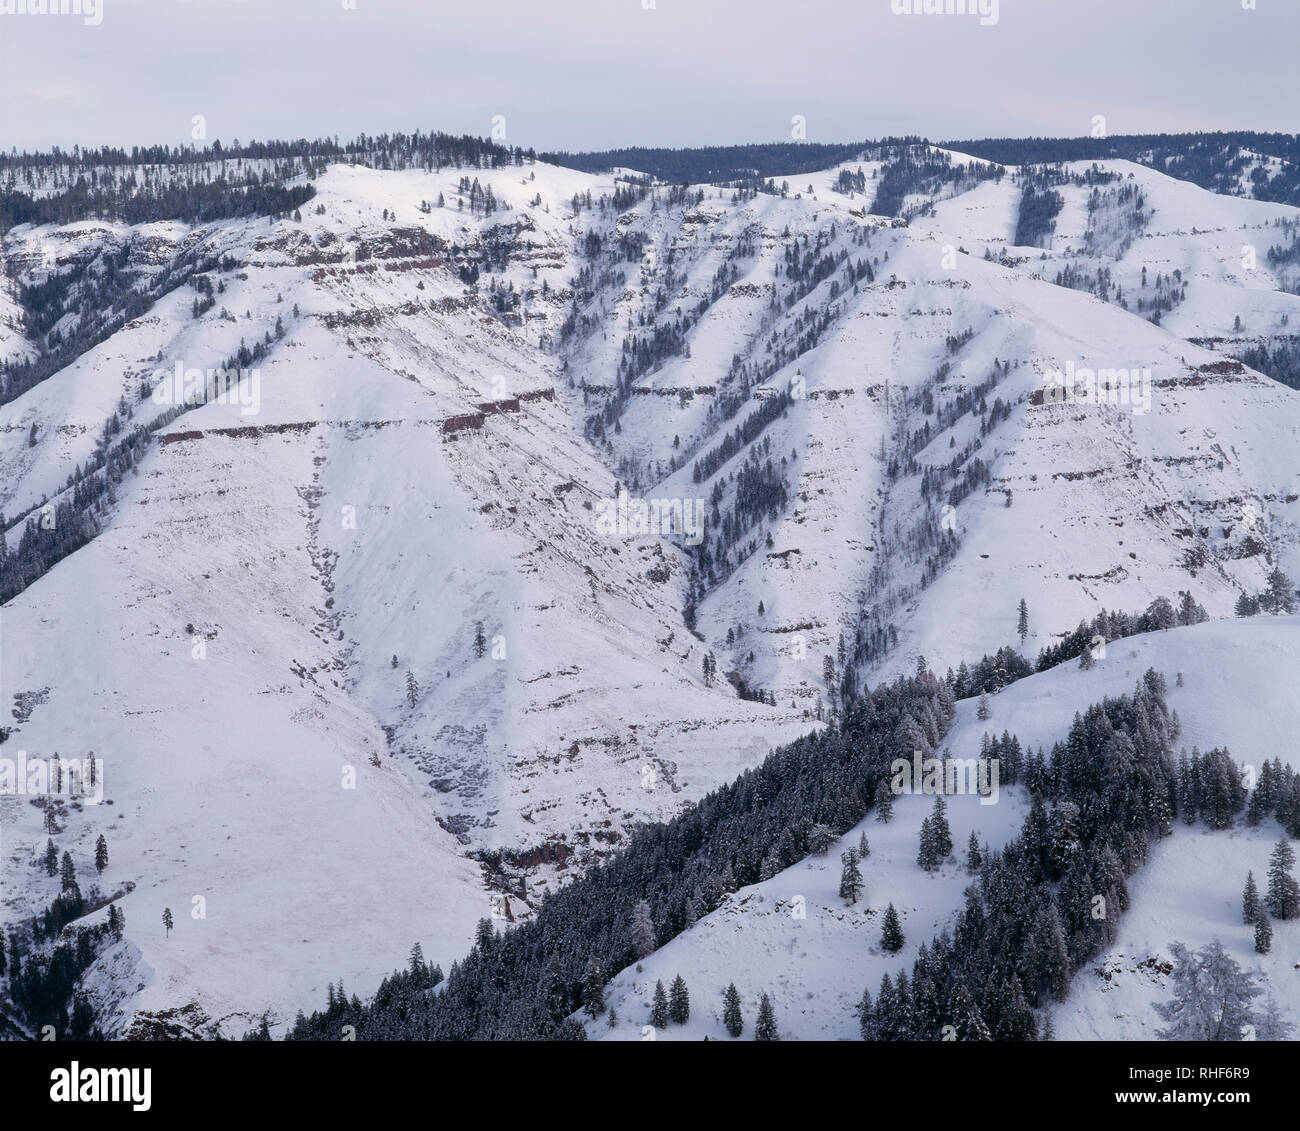 Stati Uniti d'America, Oregon, Wallowa-Whitman National Forest, inverno vista da Giuseppe Canyon Overlook verso la coperta di neve Giuseppe Canyon. Foto Stock